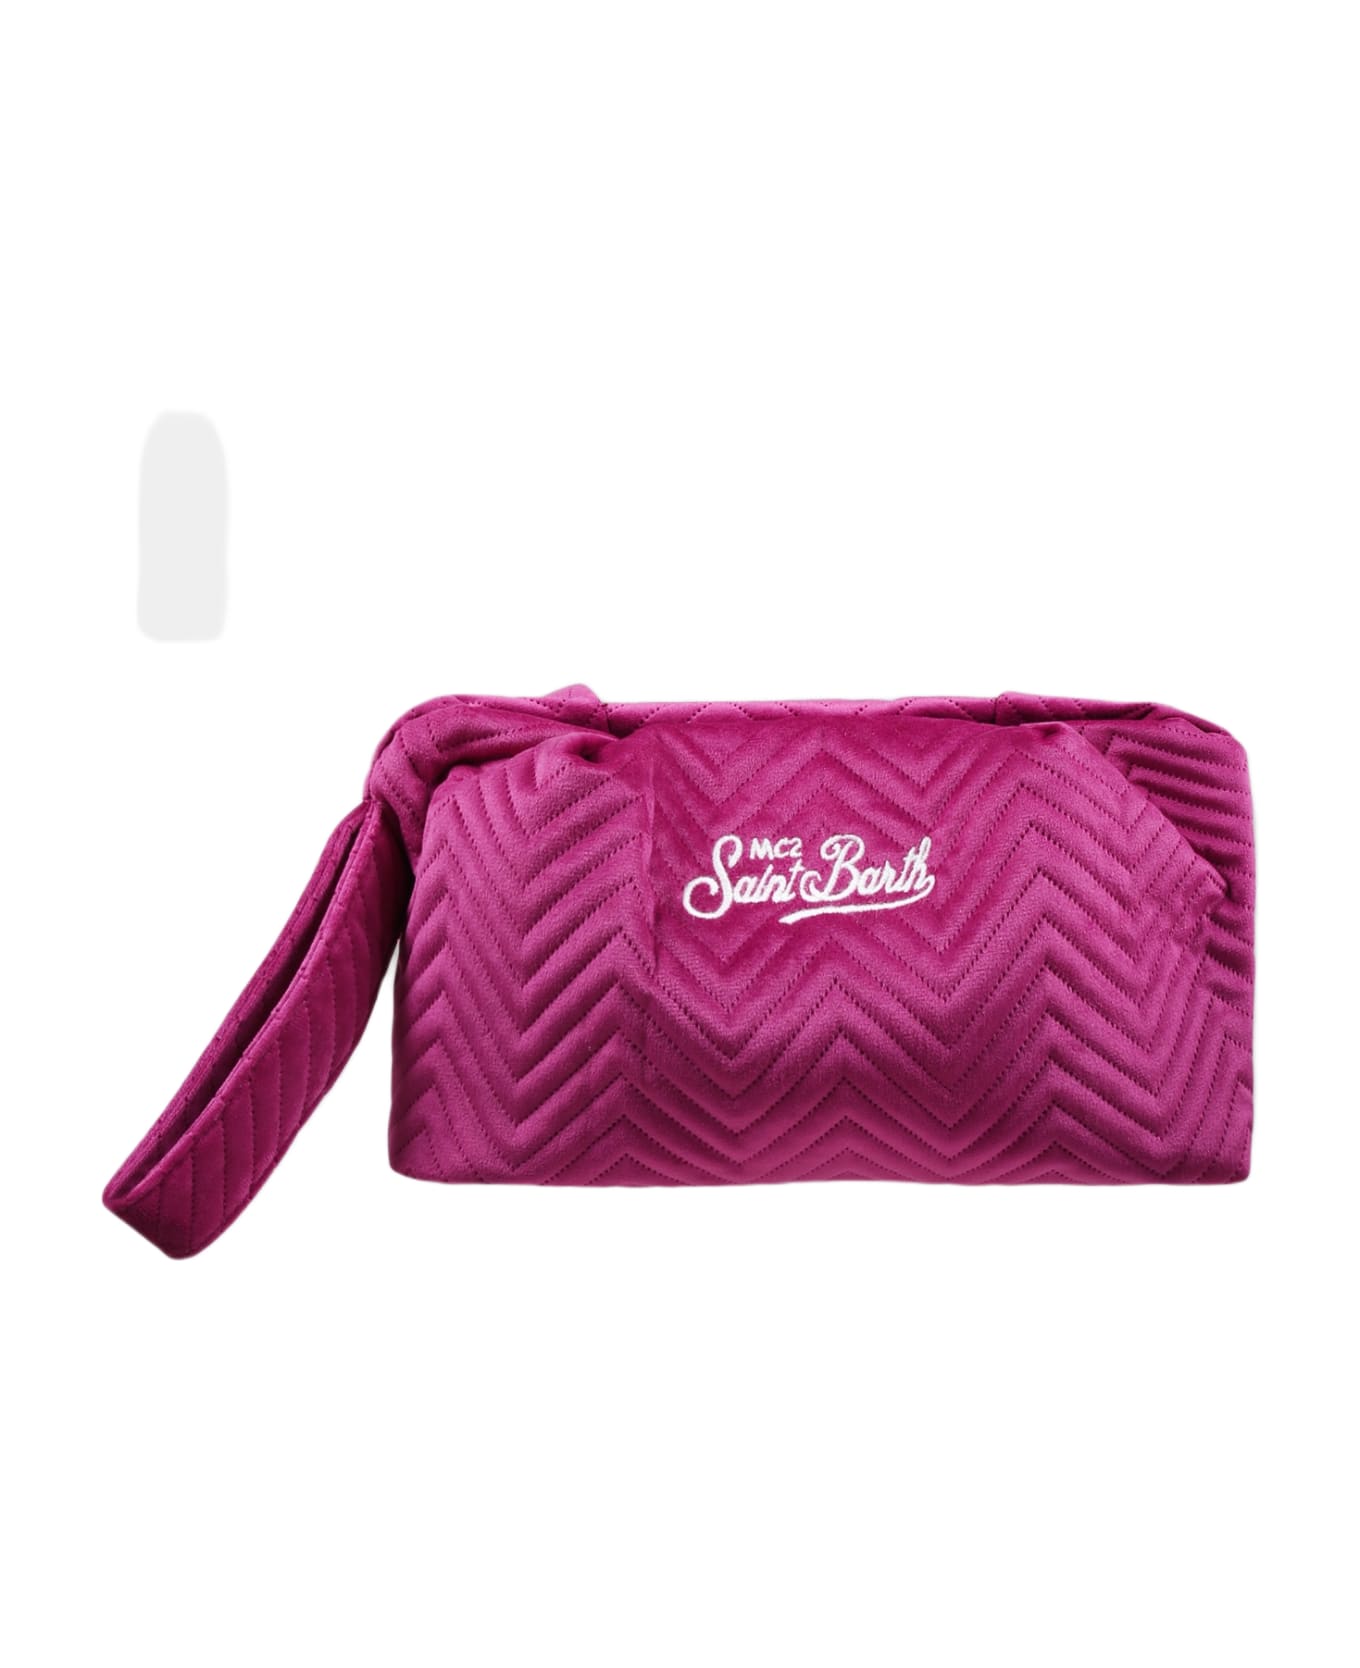 MC2 Saint Barth Fuchsia Bag For Girl With Logo - Fuchsia